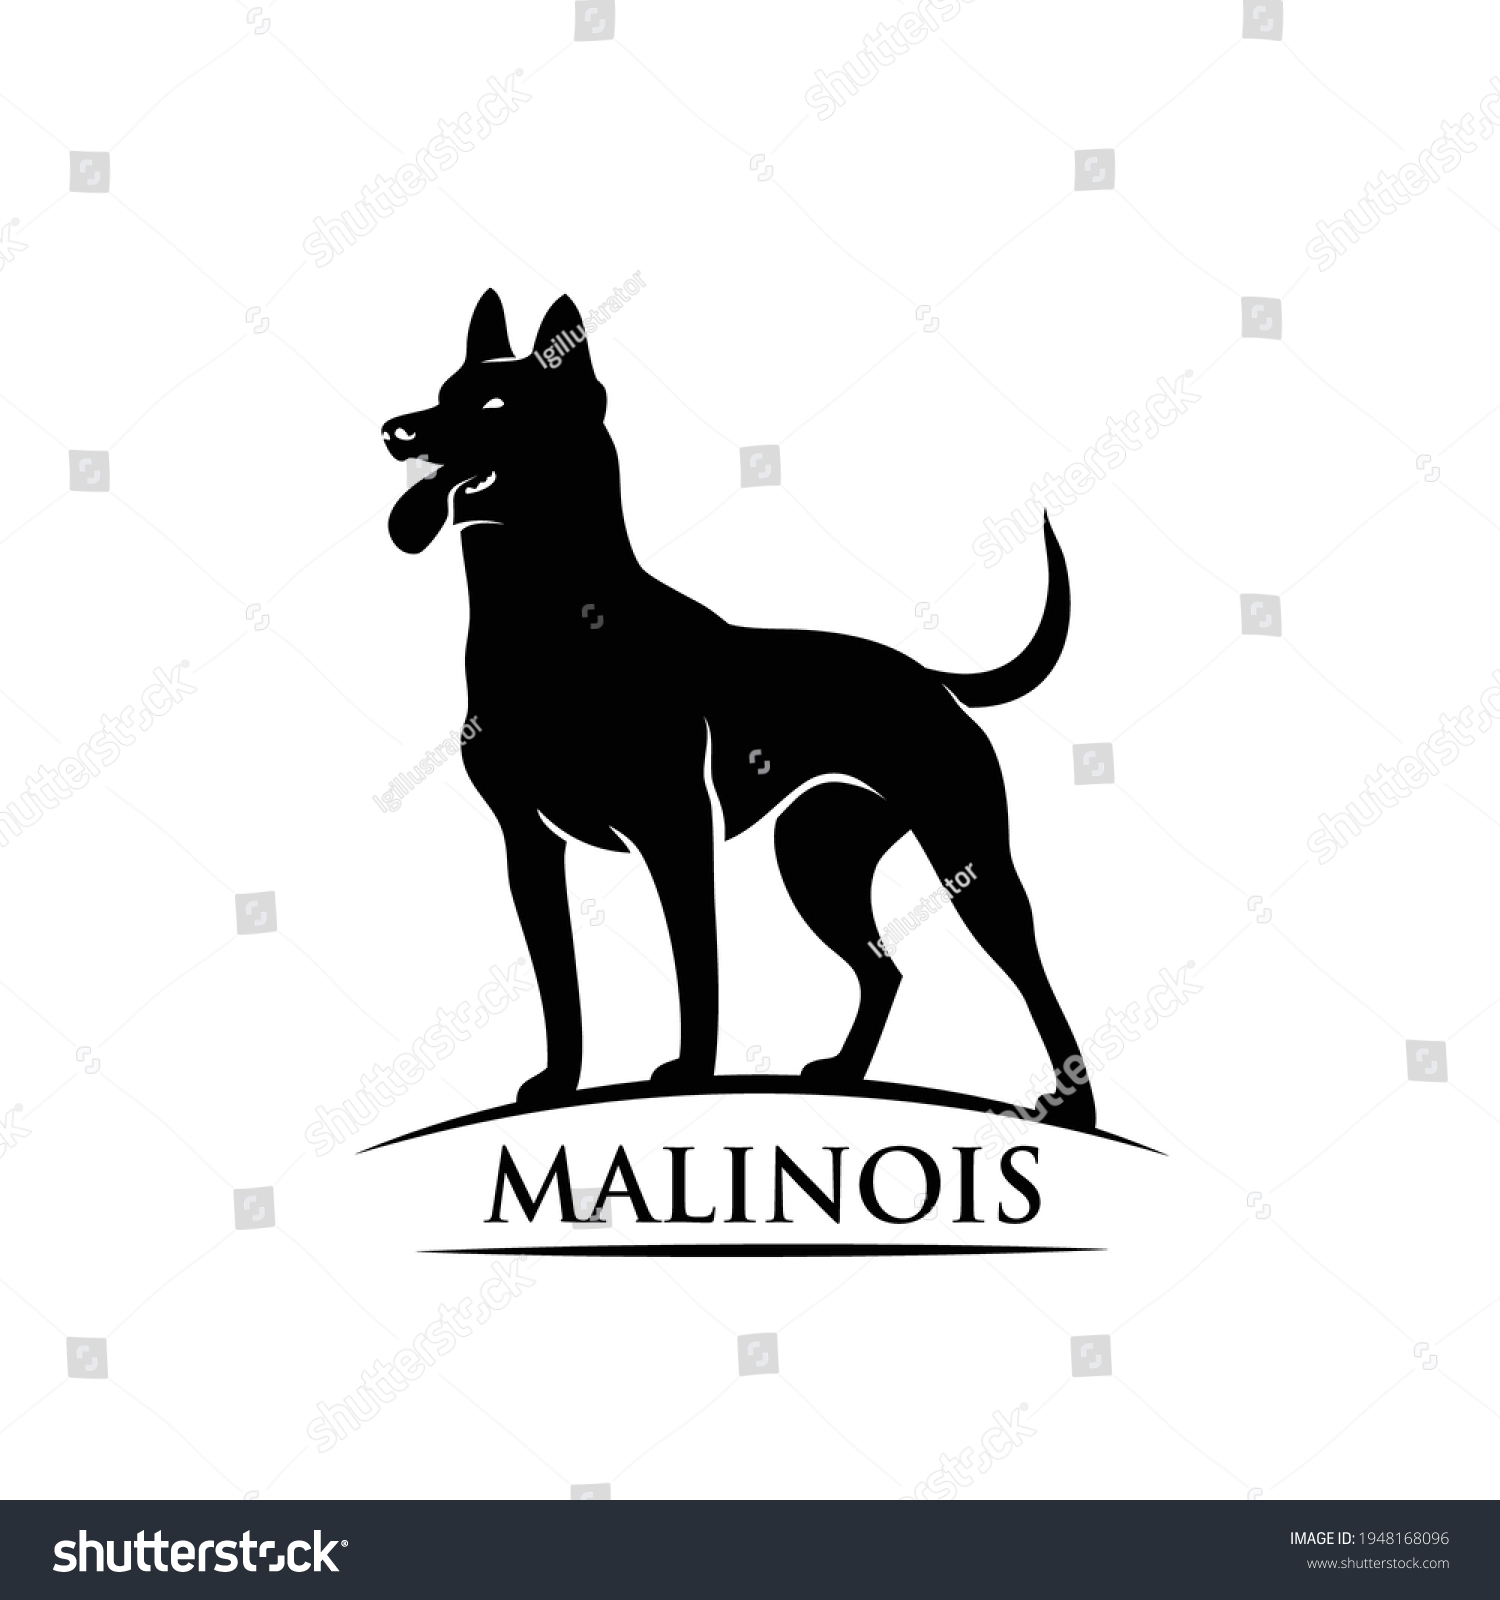 SVG of Belgian shepherd dog Malinois - isolated vector illustration svg